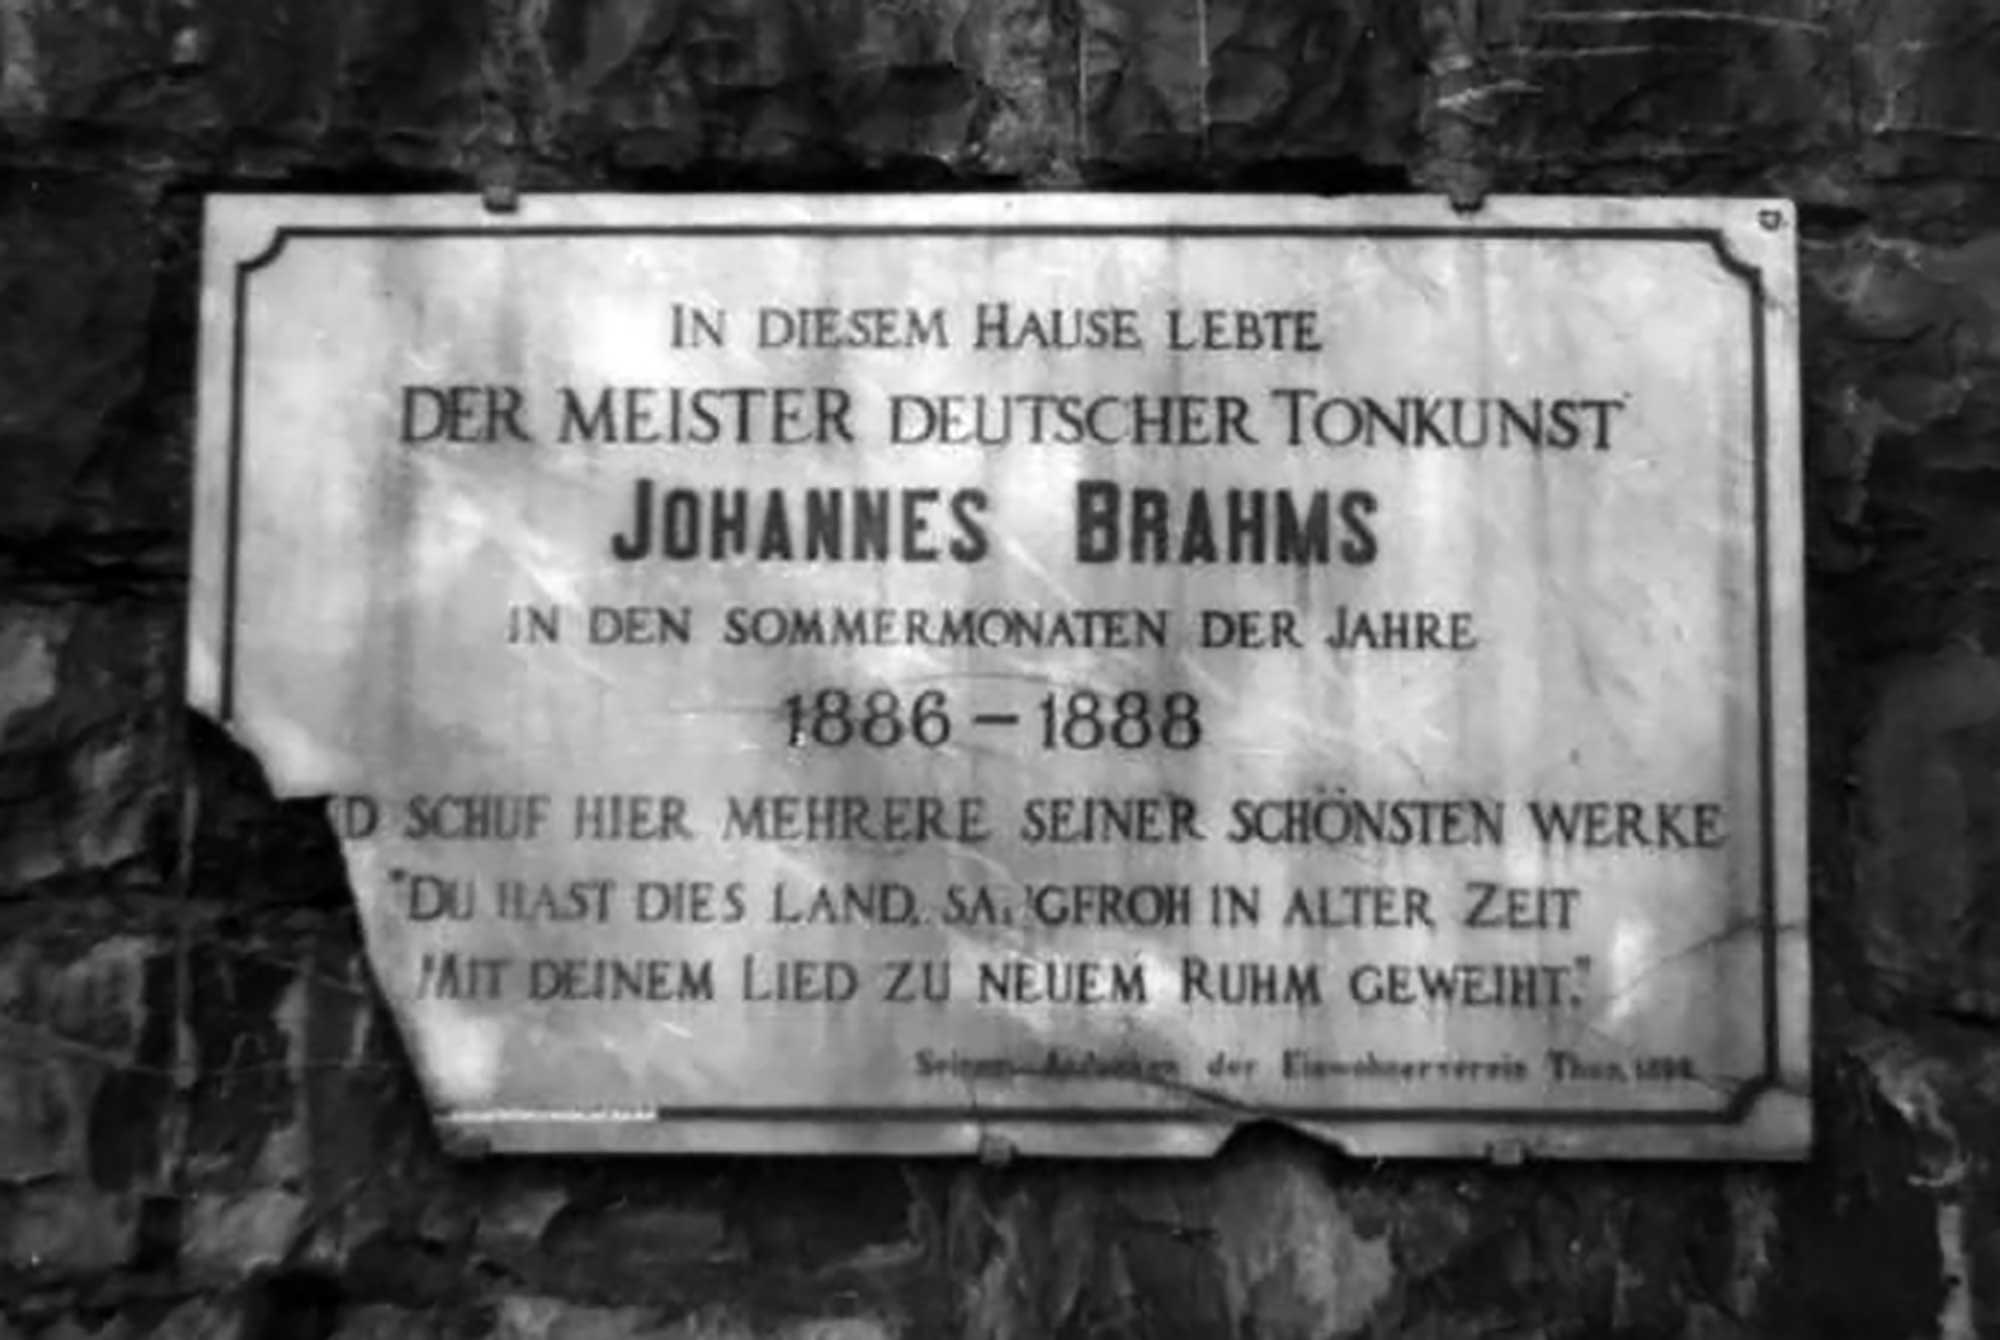 Brahms plaque